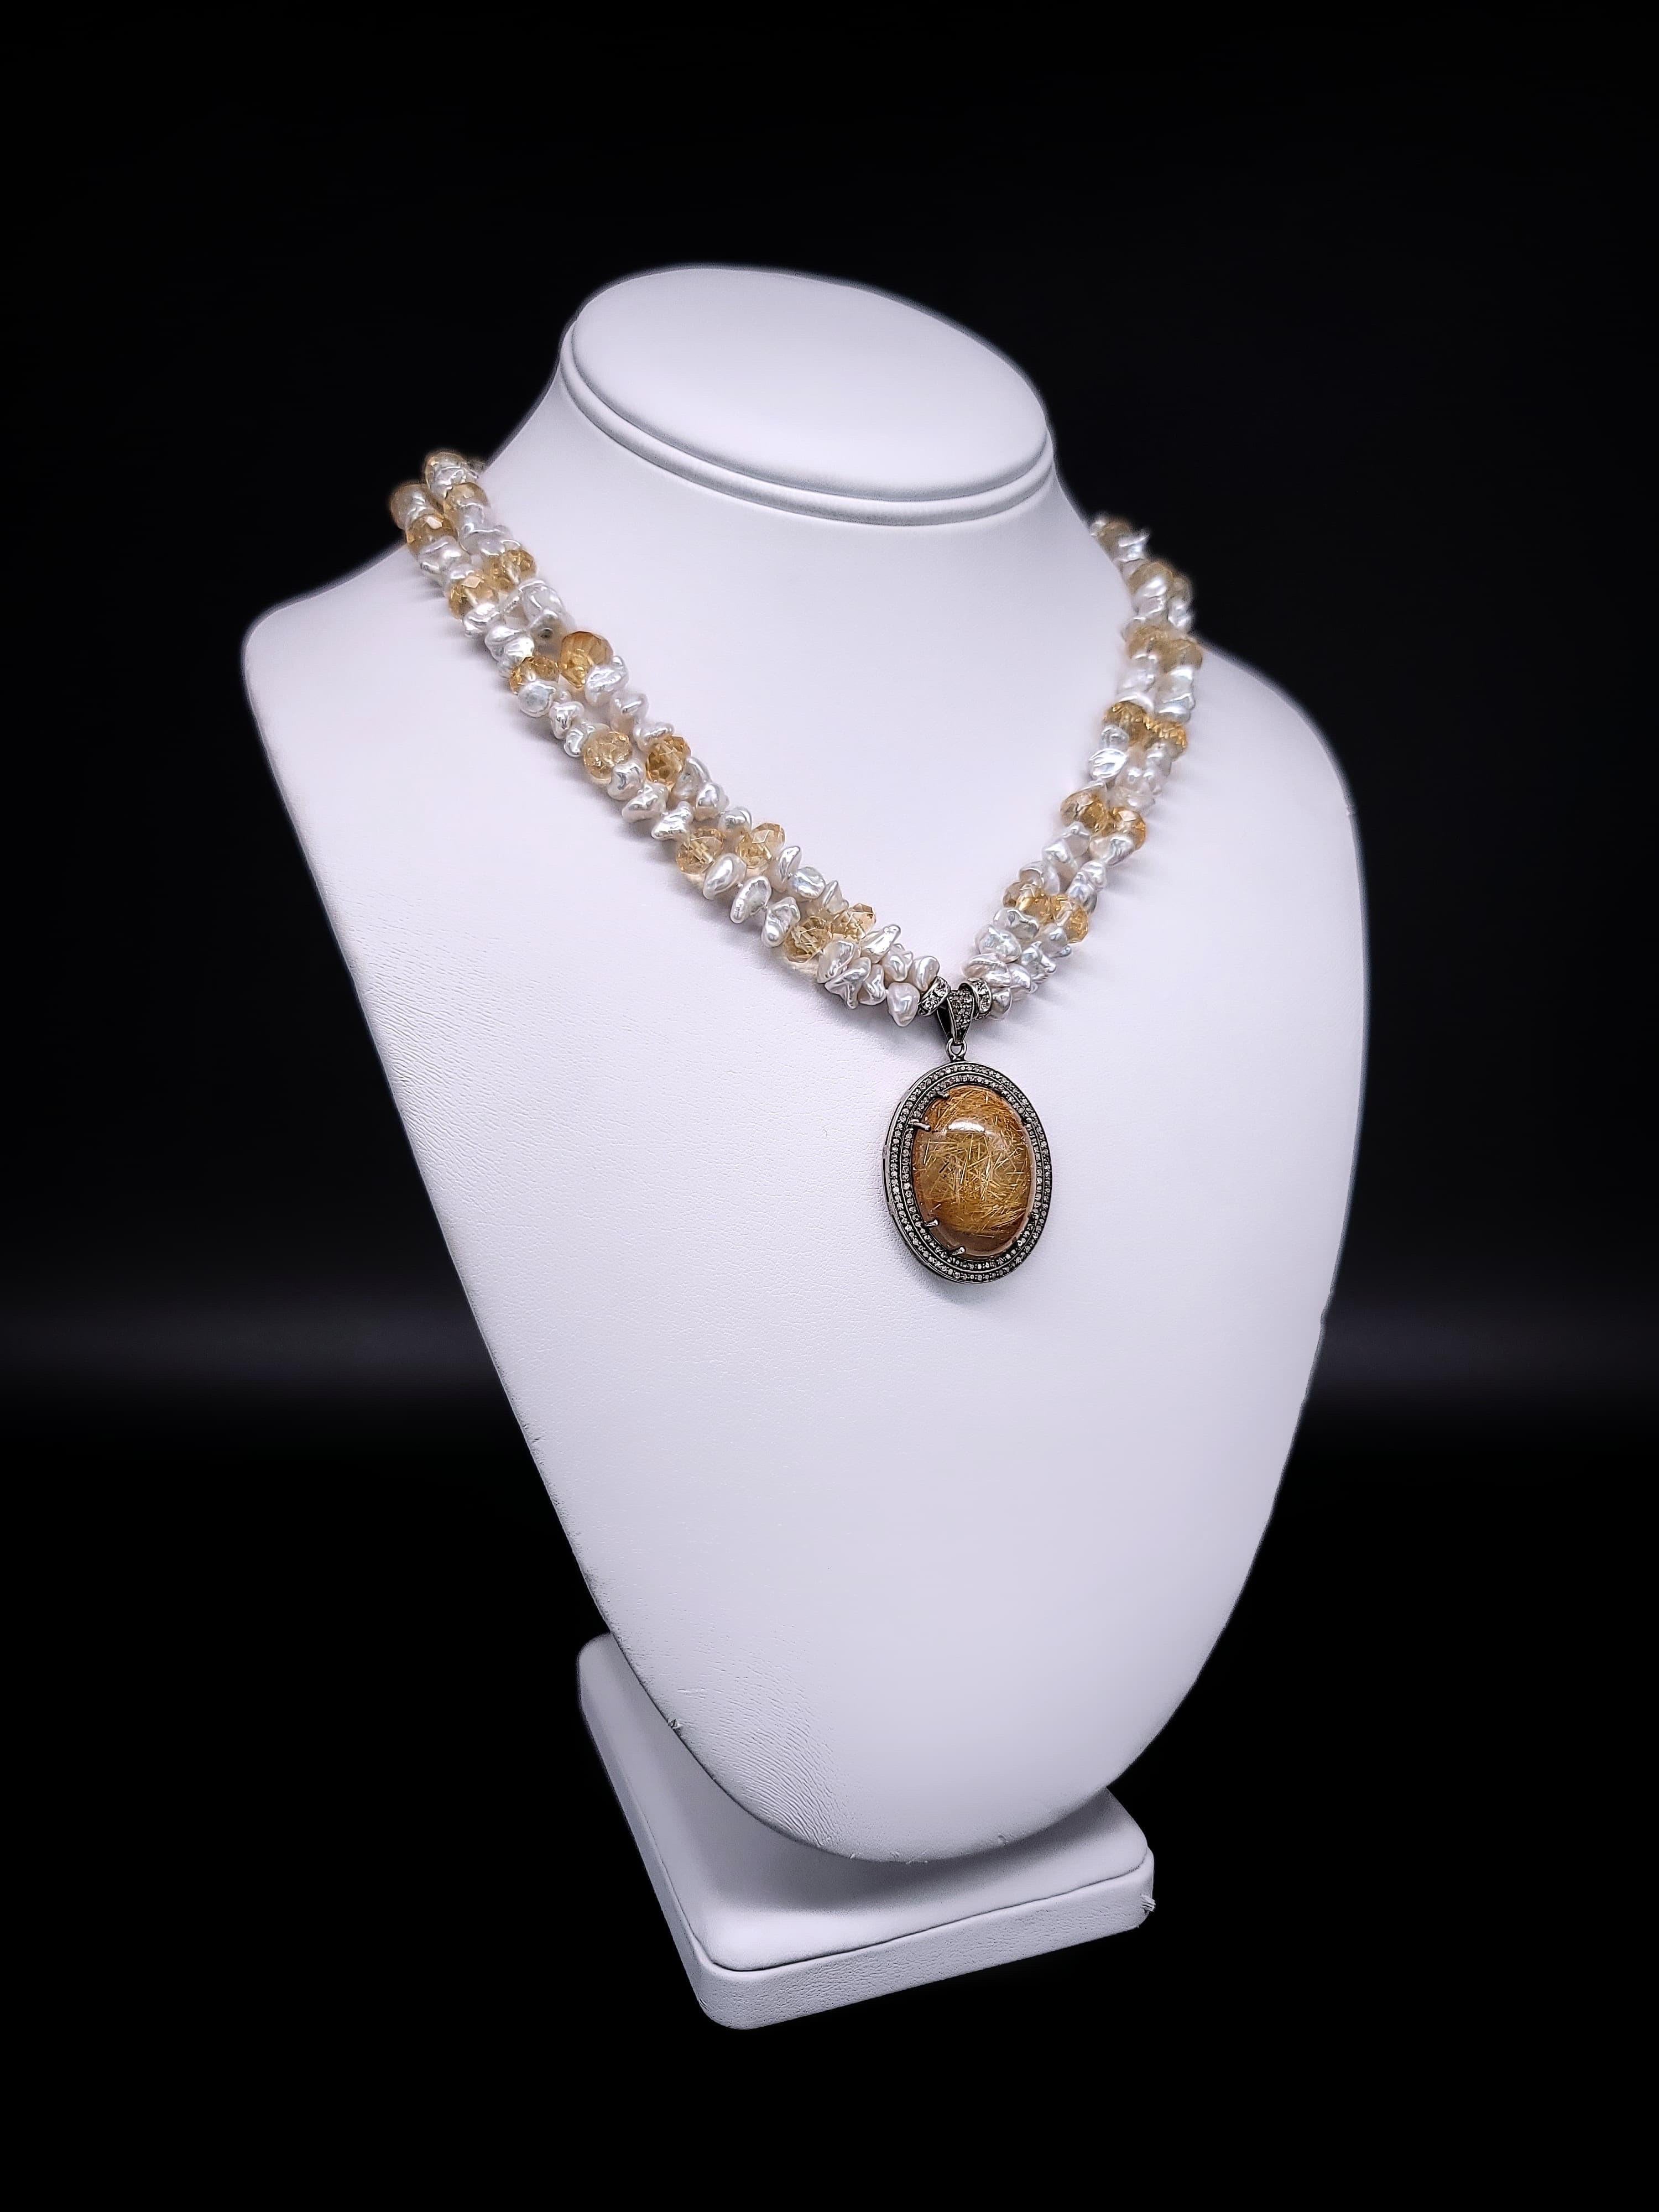 A.Jeschel Masterpiece of Golden Rutilated Quartz Pendant encircled with Diamonds For Sale 4